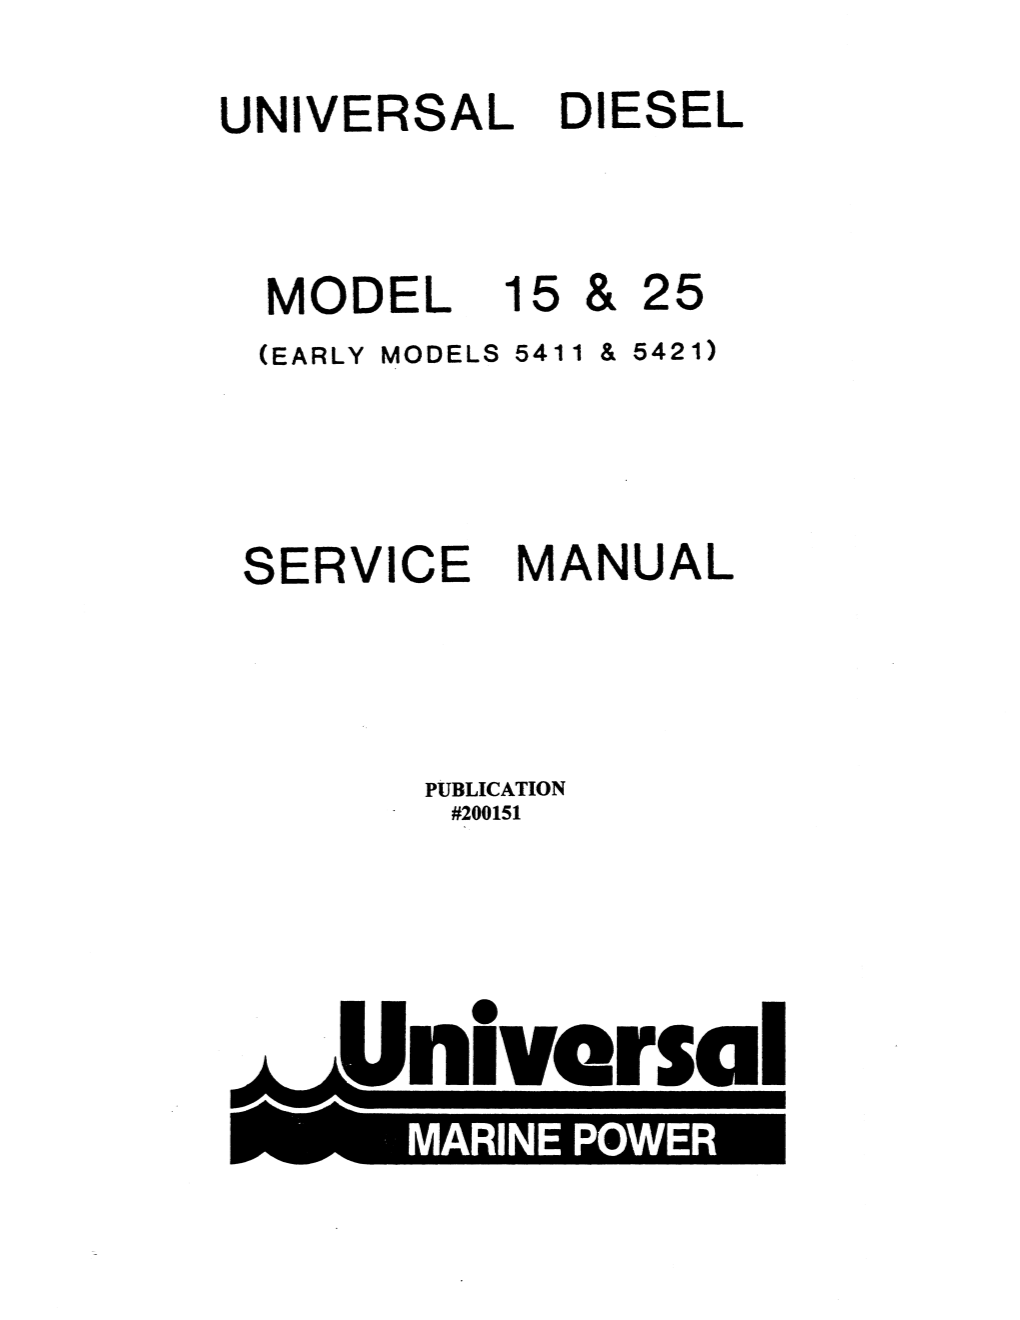 Universal Diesel Model 15 & 25 Service Manual